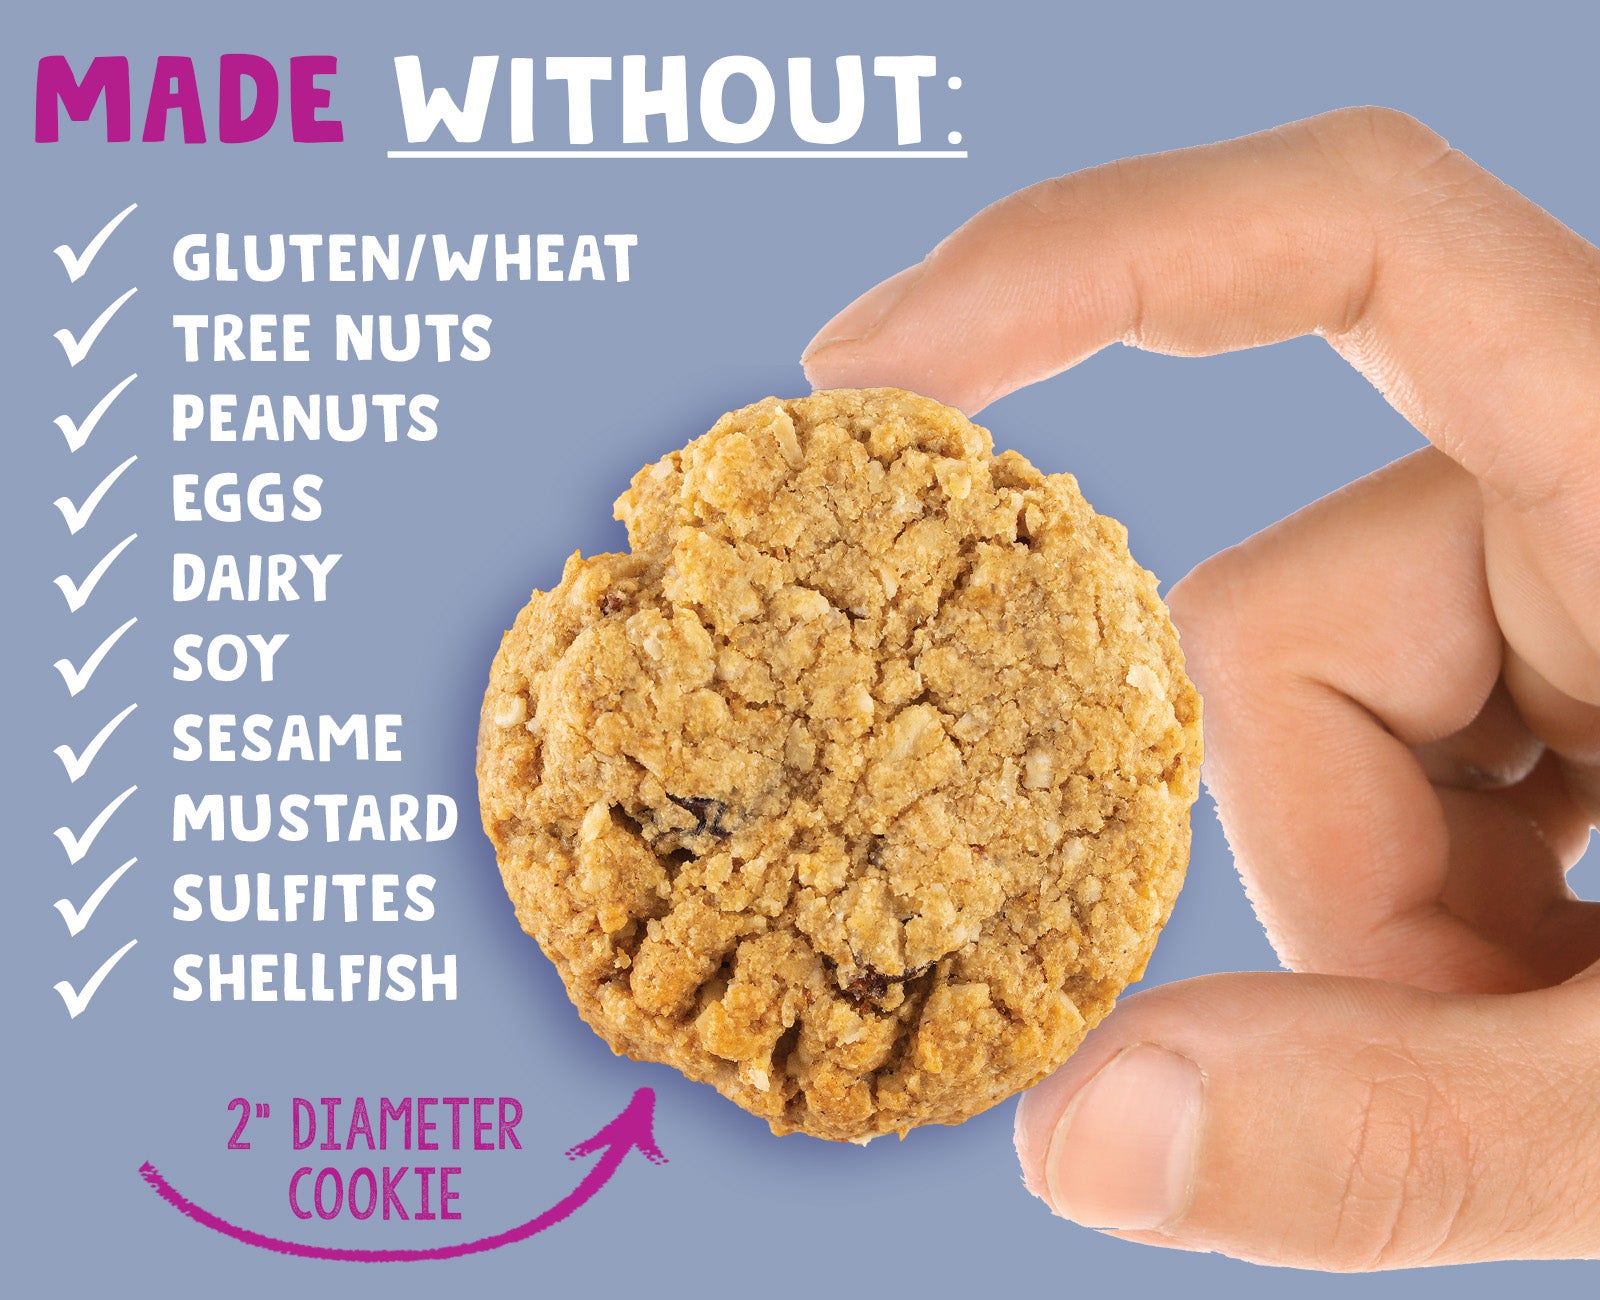 Oatmeal Raisin Cookies | 2 Boxes - AllergySmart - Green Gourmand Foods Inc.